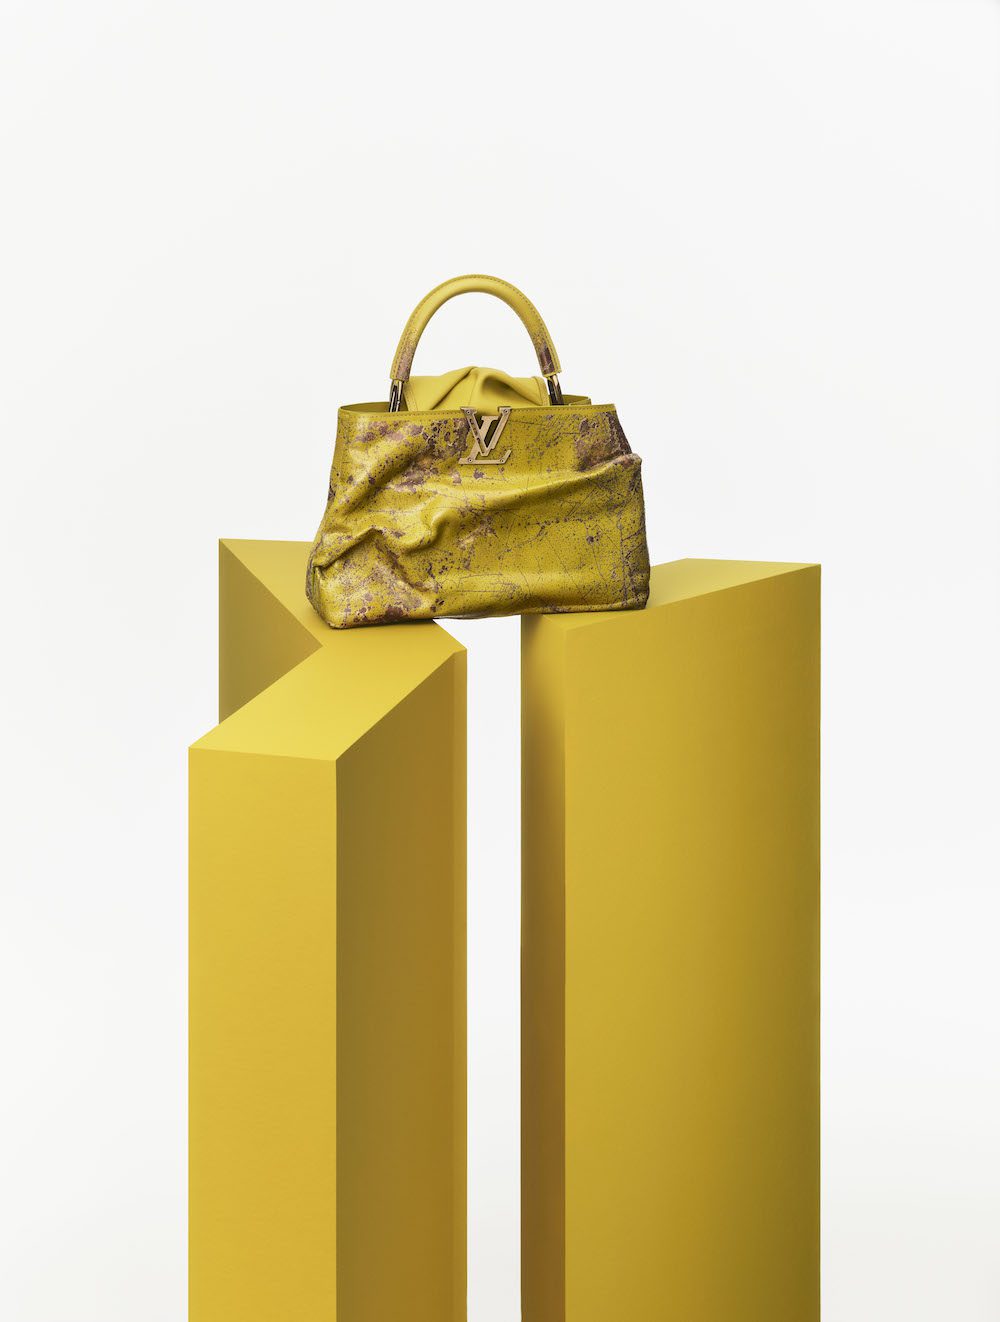 Louis Vuitton's Fifth Artycapucines Collection, Handbag Photos – WWD